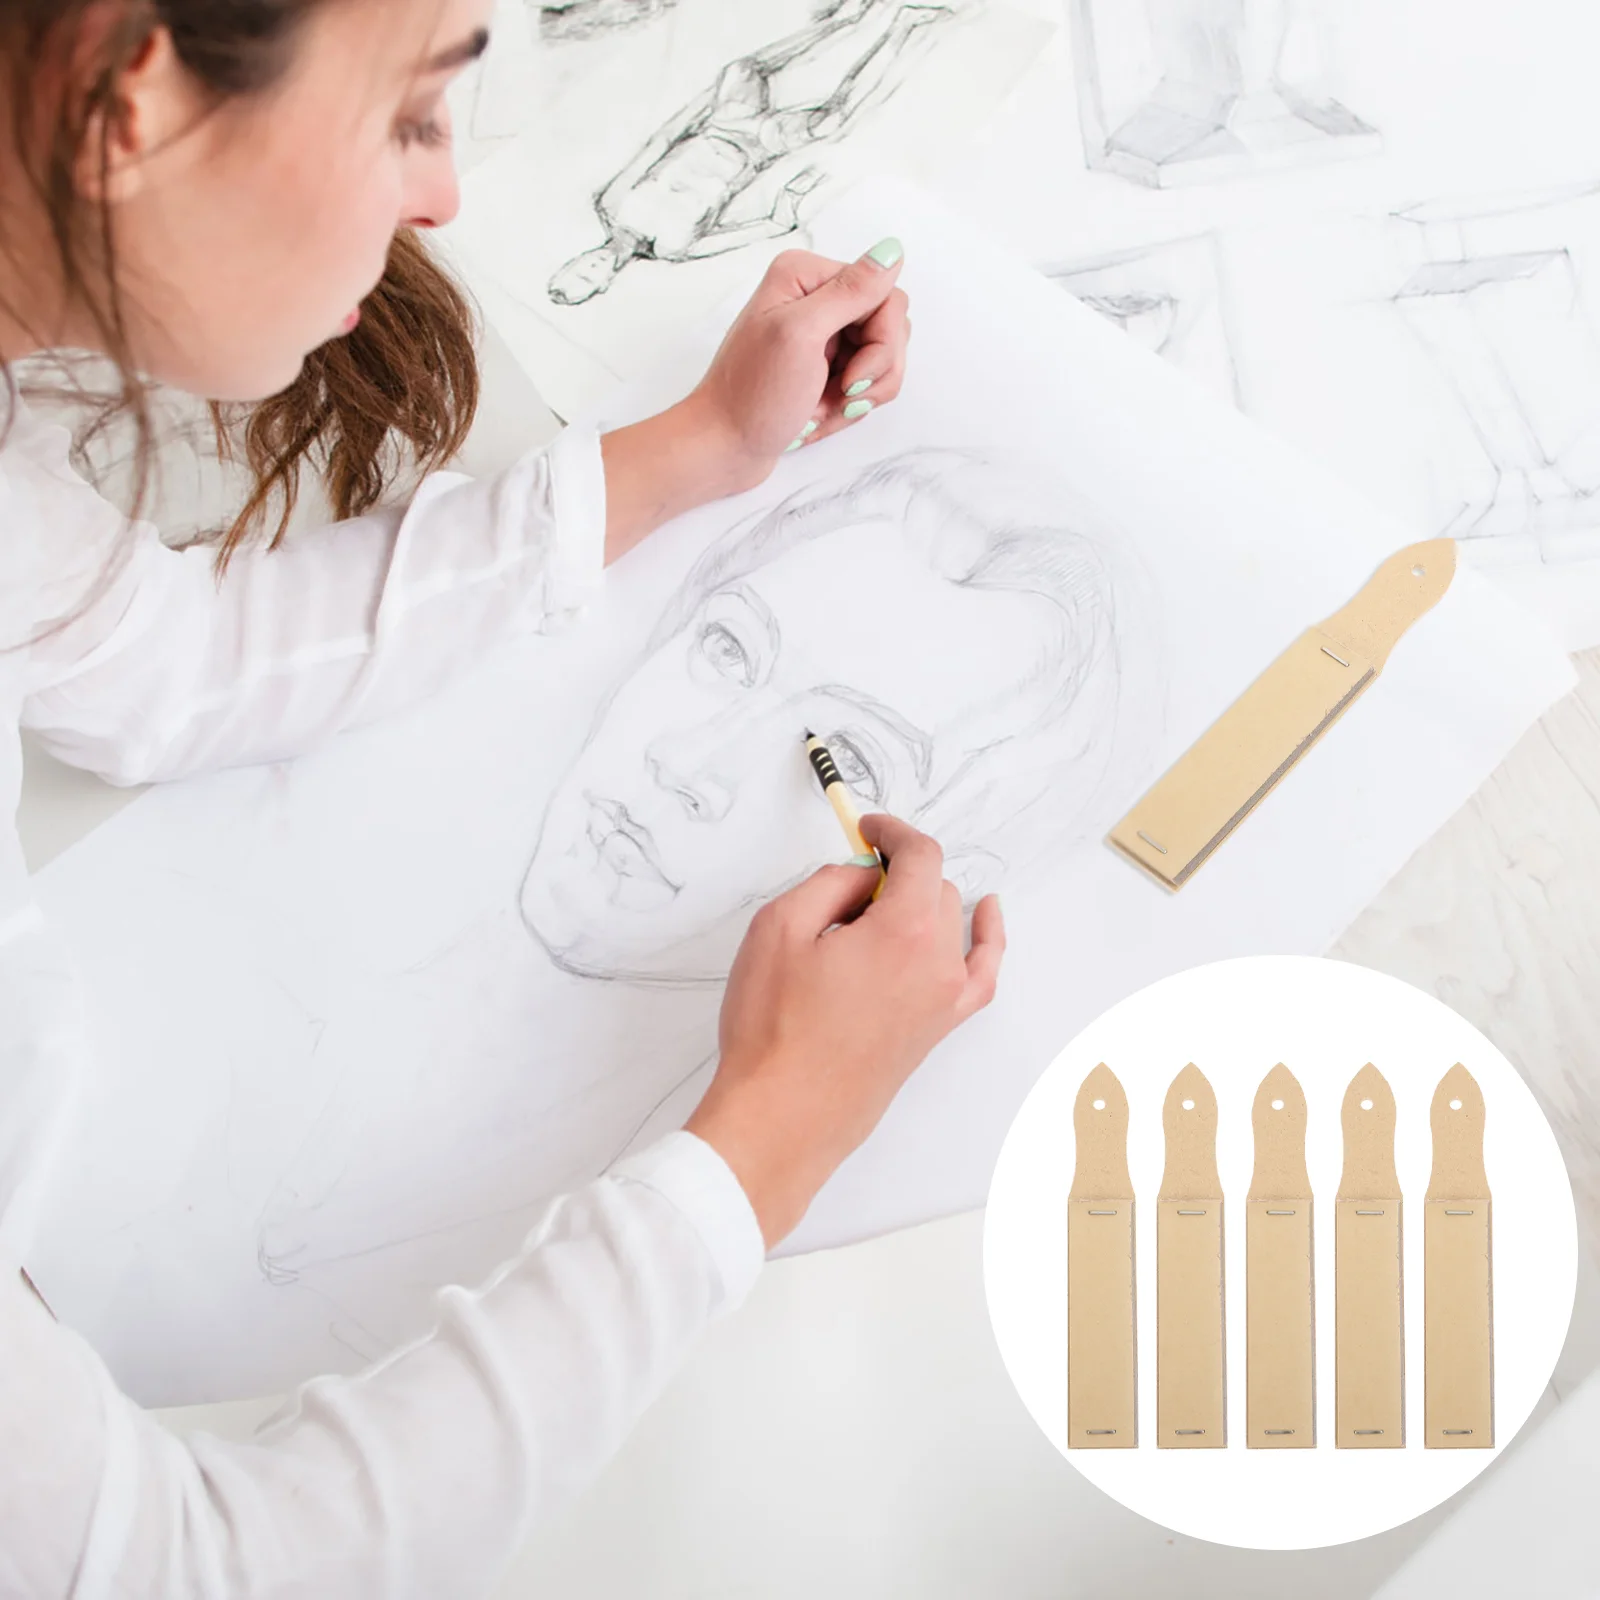 

5 Pcs Nib Sandpaper Board Artistic Supplies Drafting Pencils Pointer Tip Sharpening Tool Papers Polishing Student